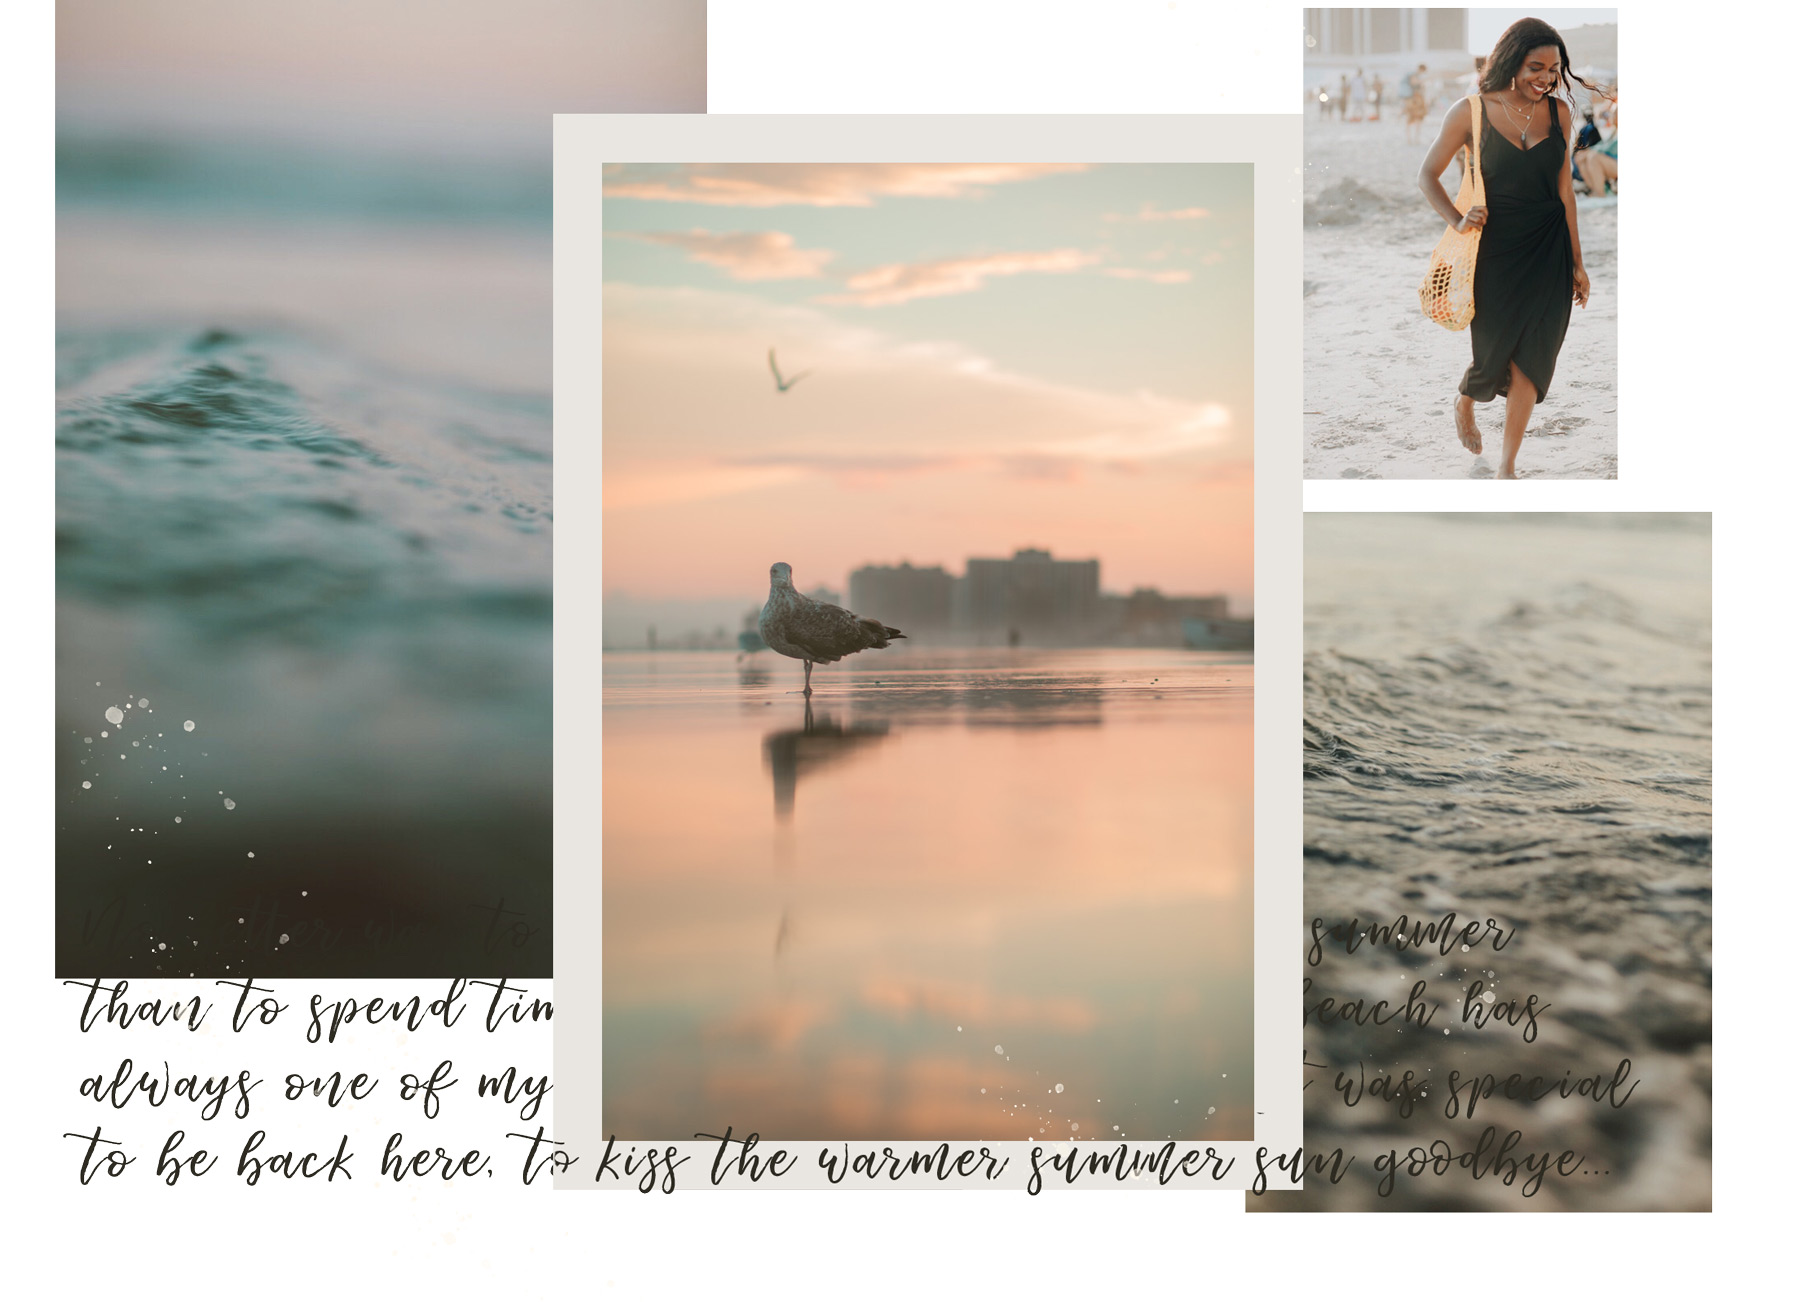 Summer-2018-Beach-Trip-memory-collage-by-Armenyl